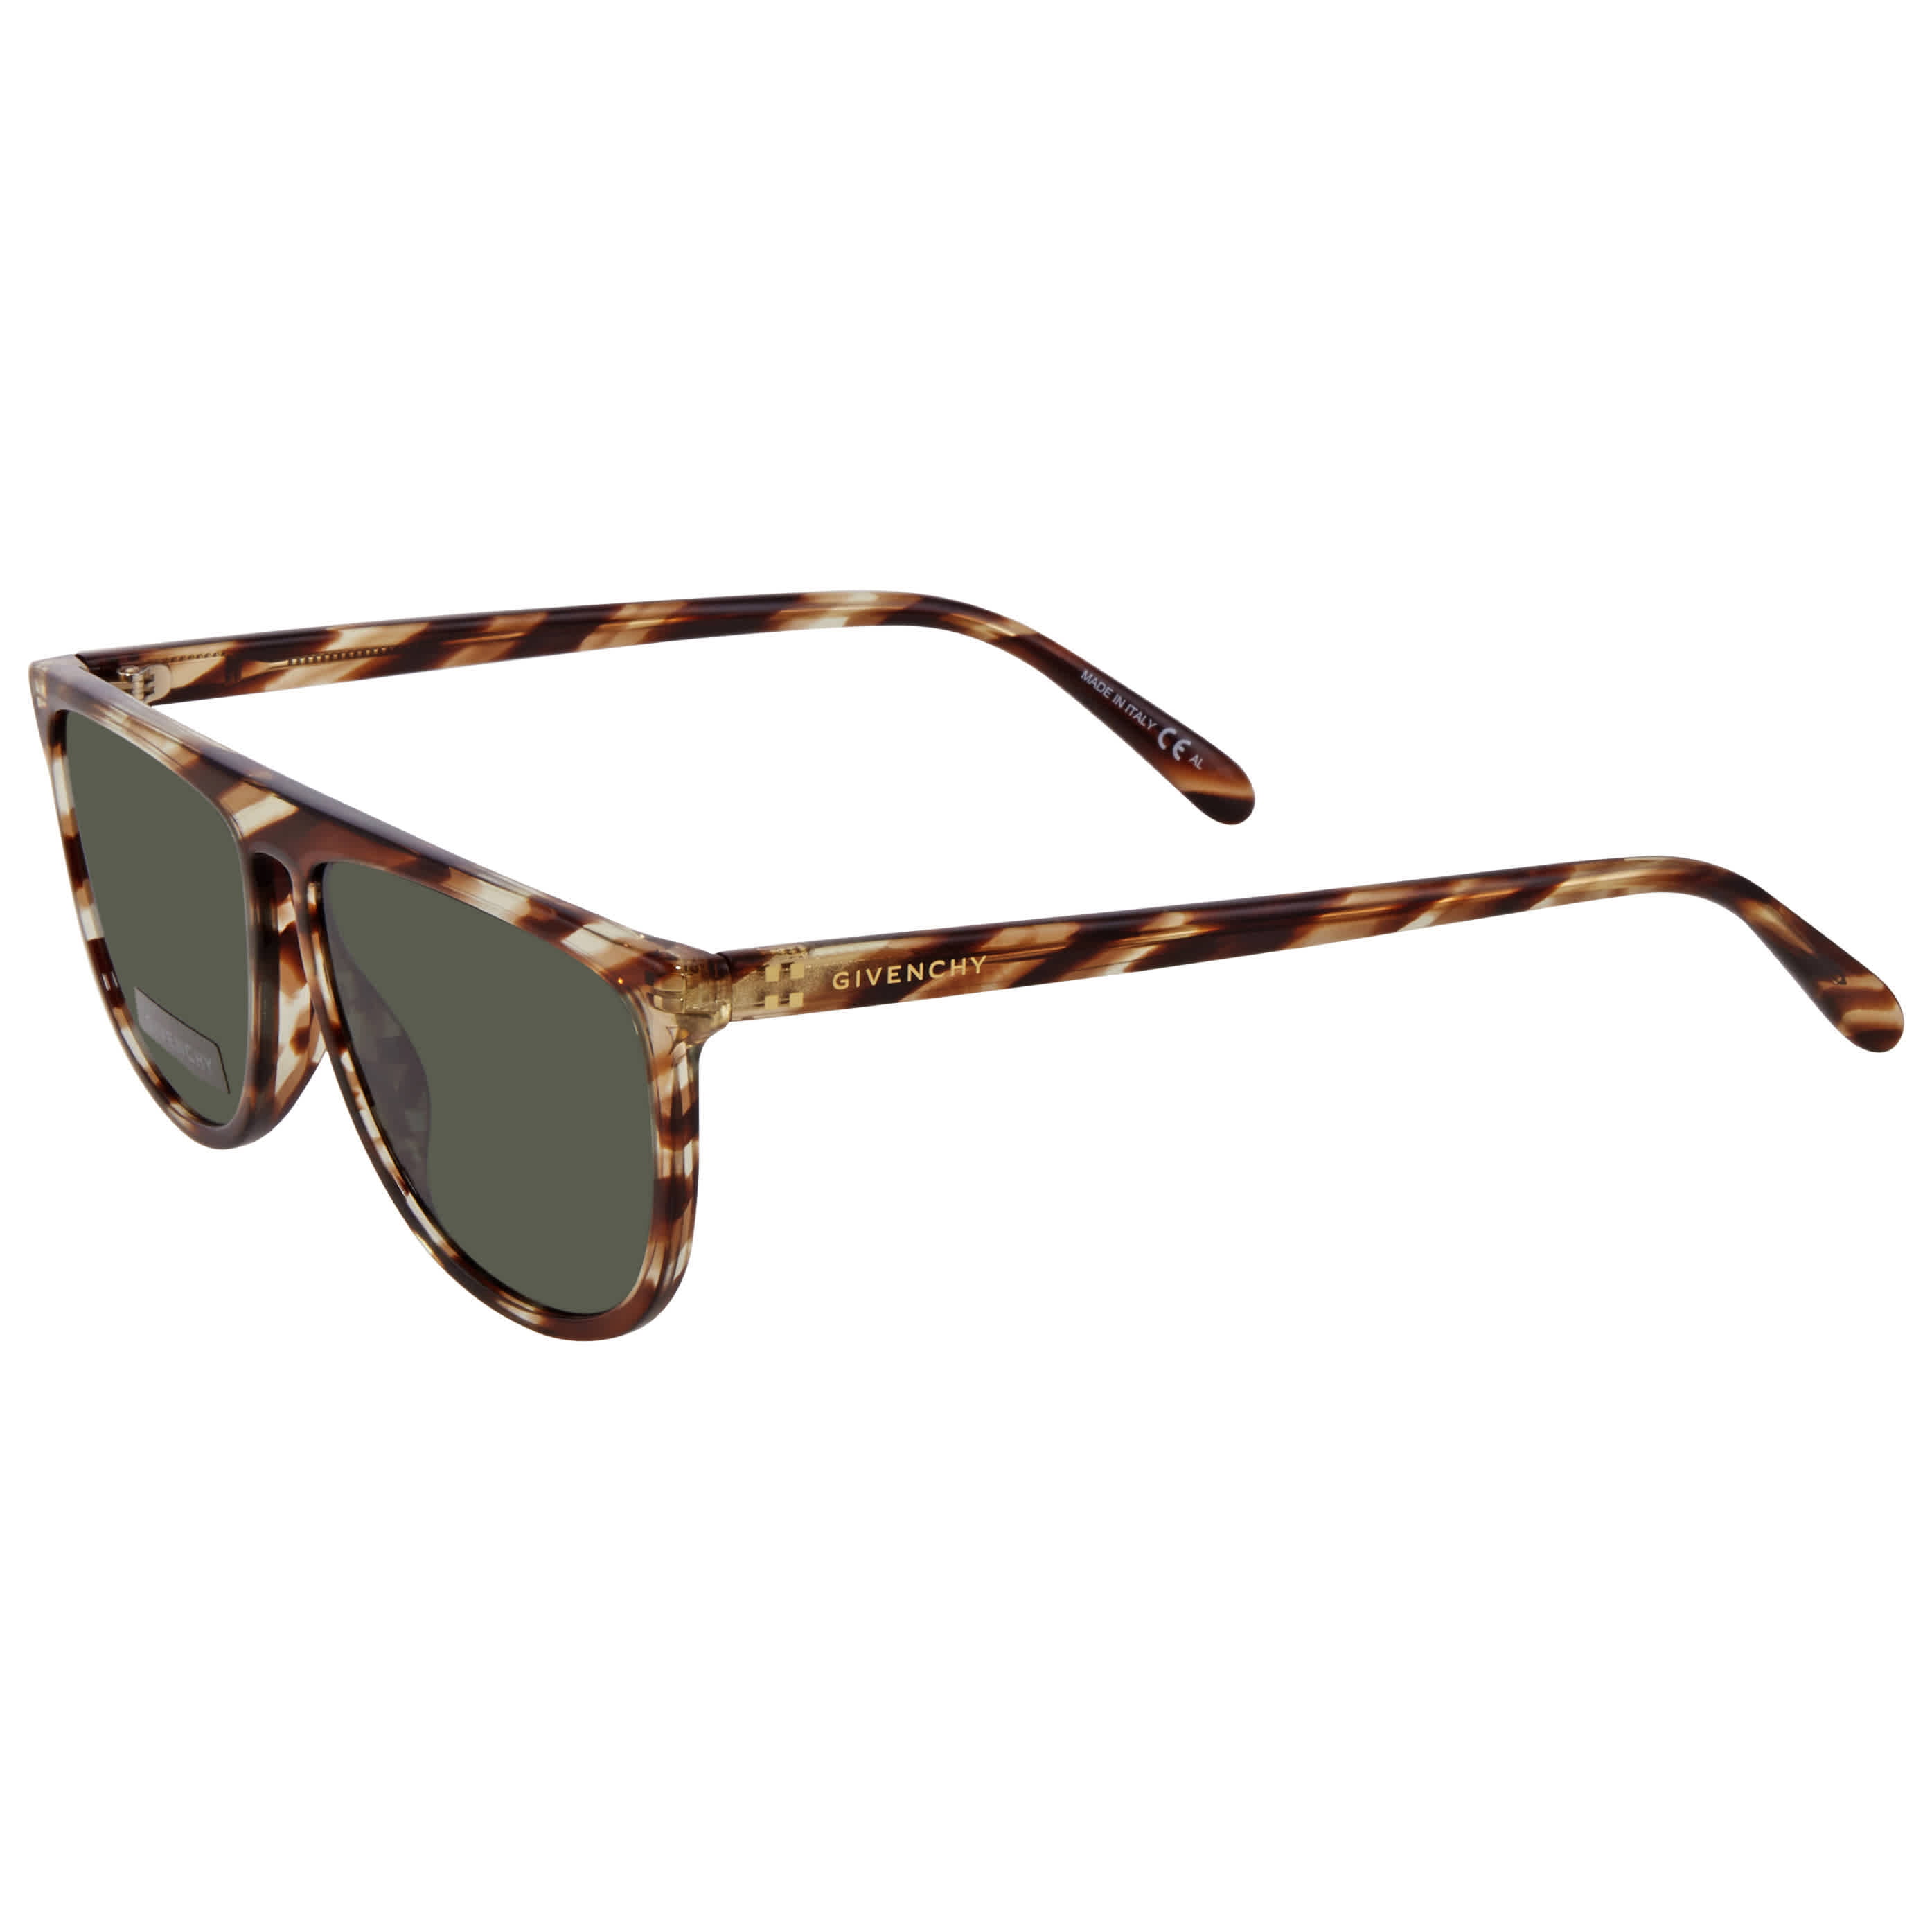 Givenchy Green Rectangular Ladies Sunglasses GV 7145/S EX4 57 14 145 -  